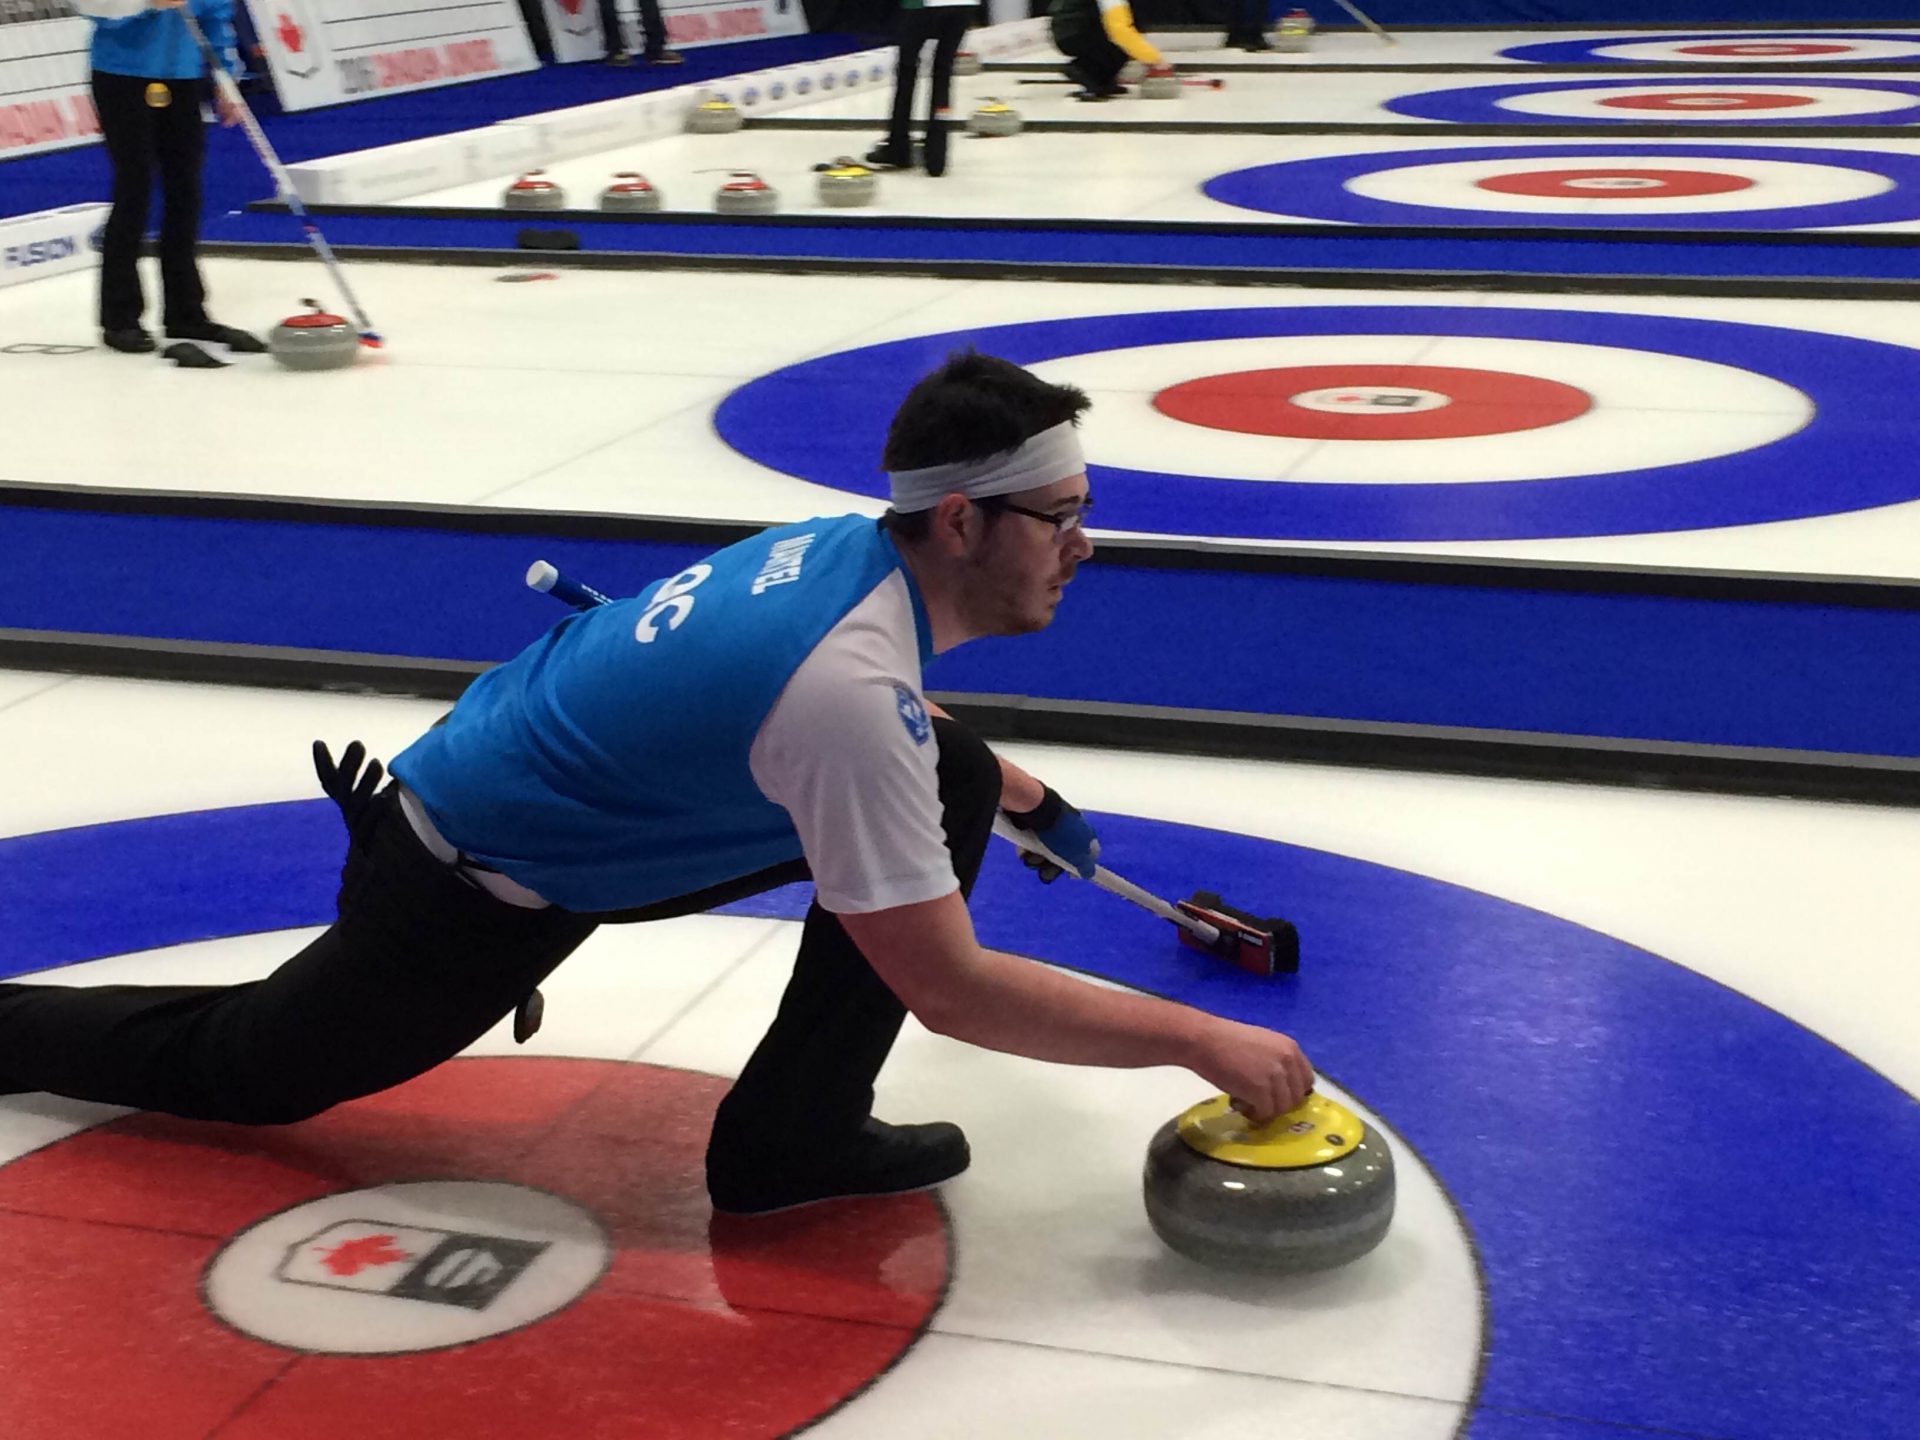 Brad Jacobs rink wins Northern Ontario Men’s Curling Championship